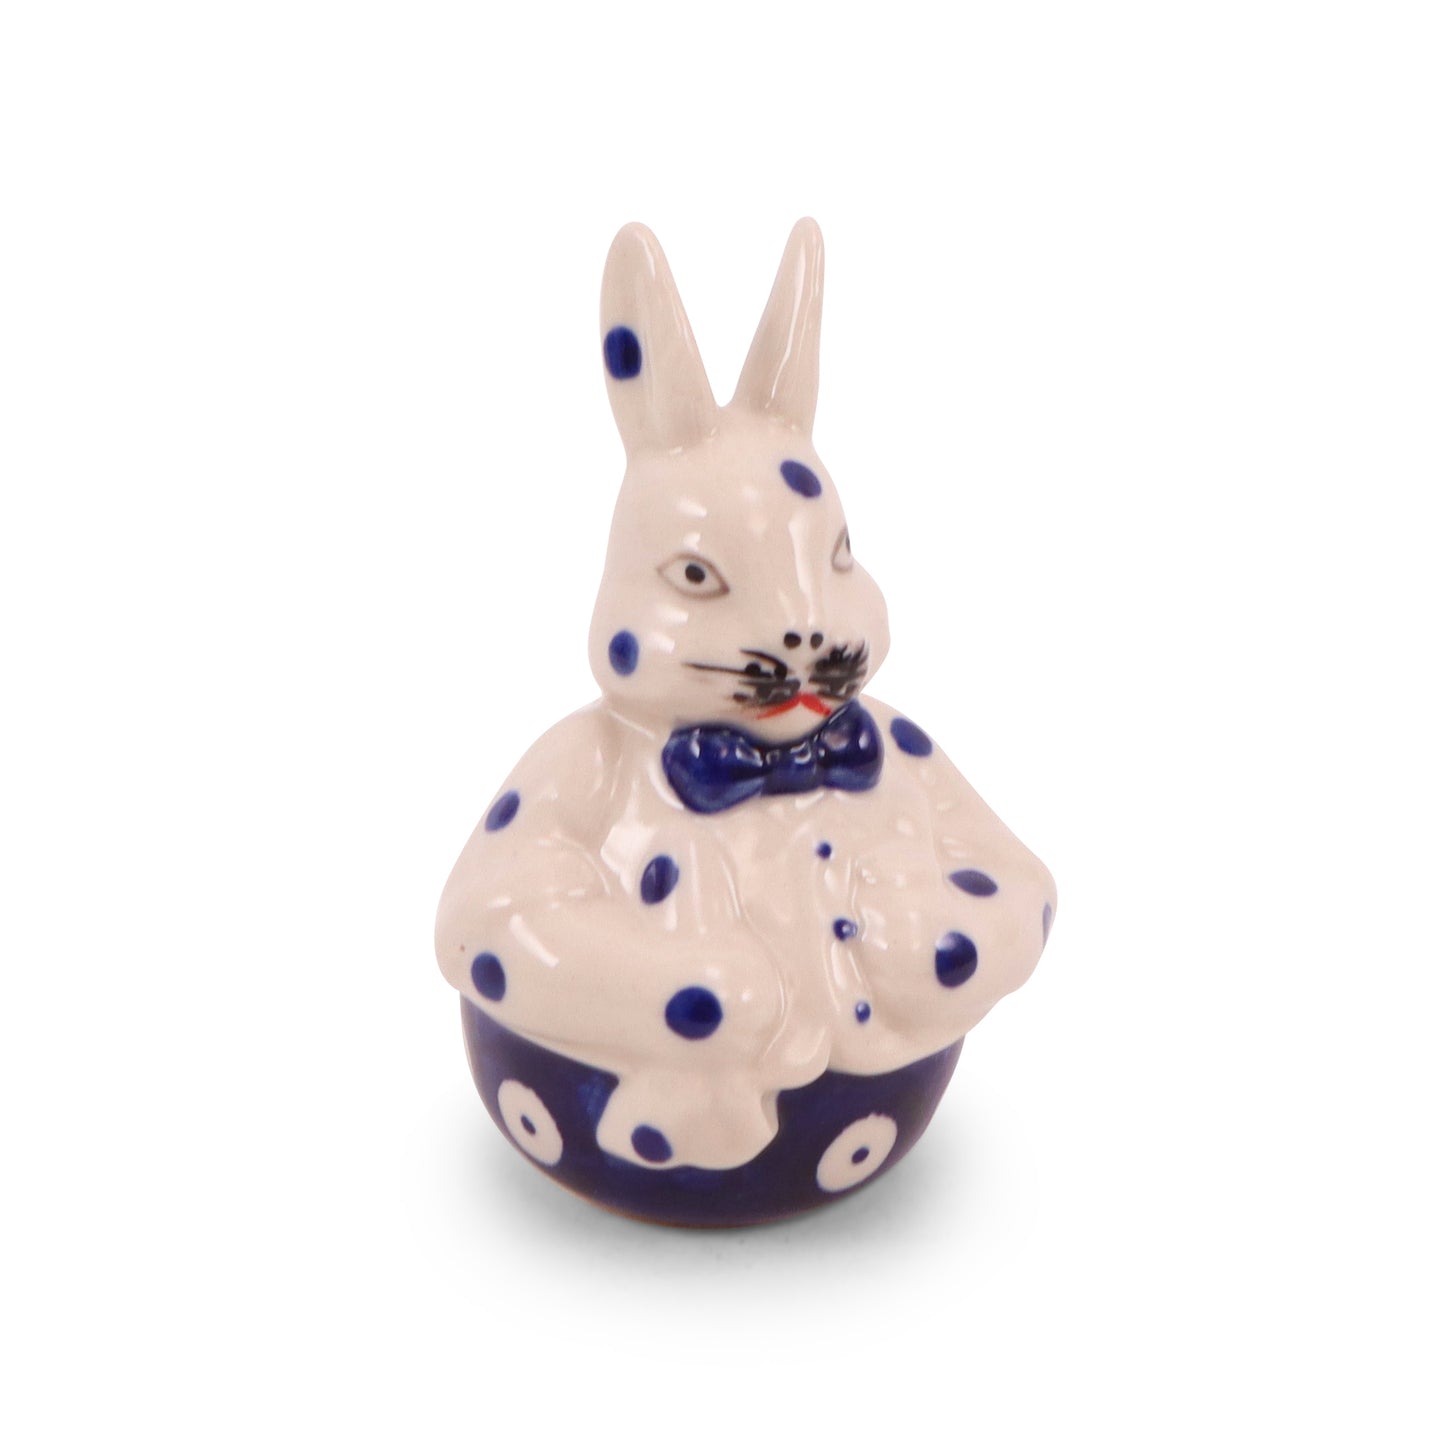 2.5"x3.5" Mr. Bunny Figurine. Pattern: Cobalt Dots